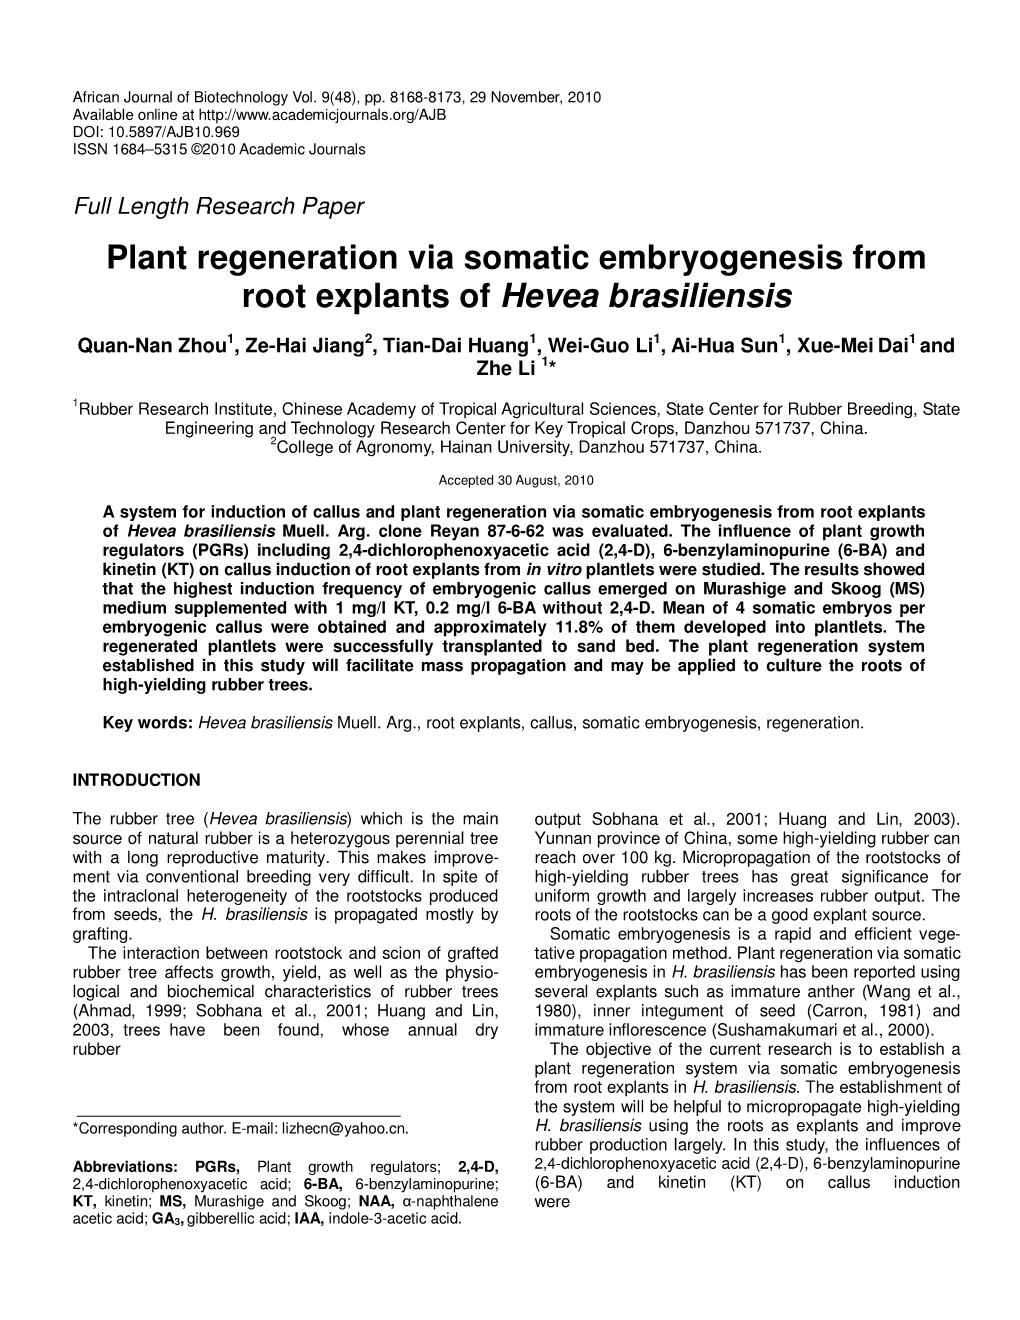 Plant Regeneration Via Somatic Embryogenesis from Root Explants of Hevea Brasiliensis